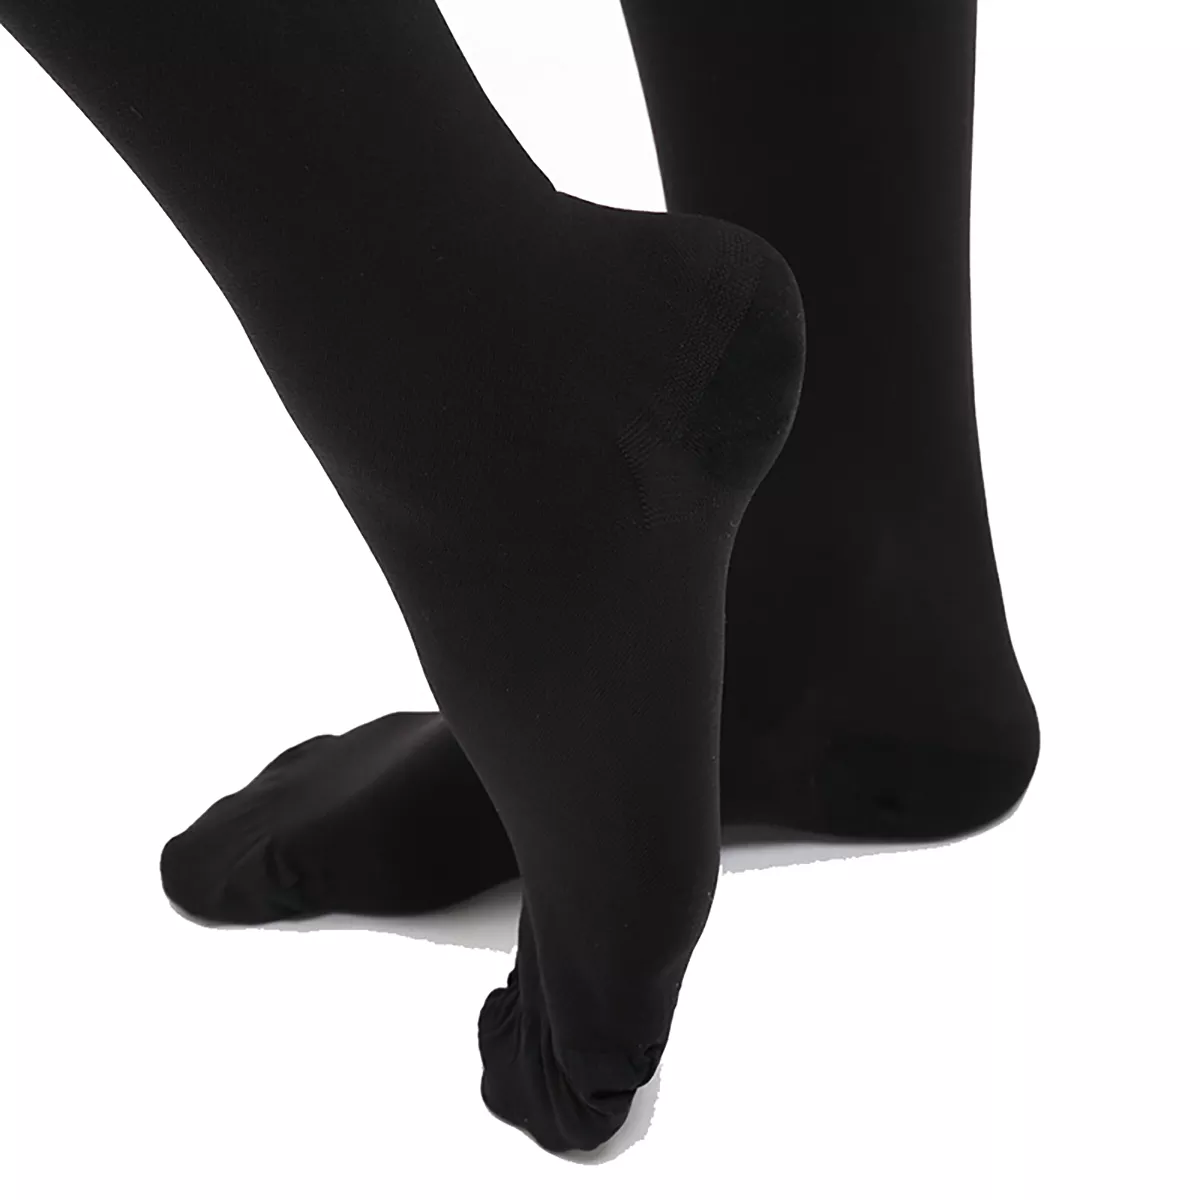 SUPERHOMUSE Pressure Compression Socks Knee High Support Socks 30-40 mmhg  Leg Pain Relief Socks Stockings Varicose Vein Relief Pain Support Socks - 5  Colors 